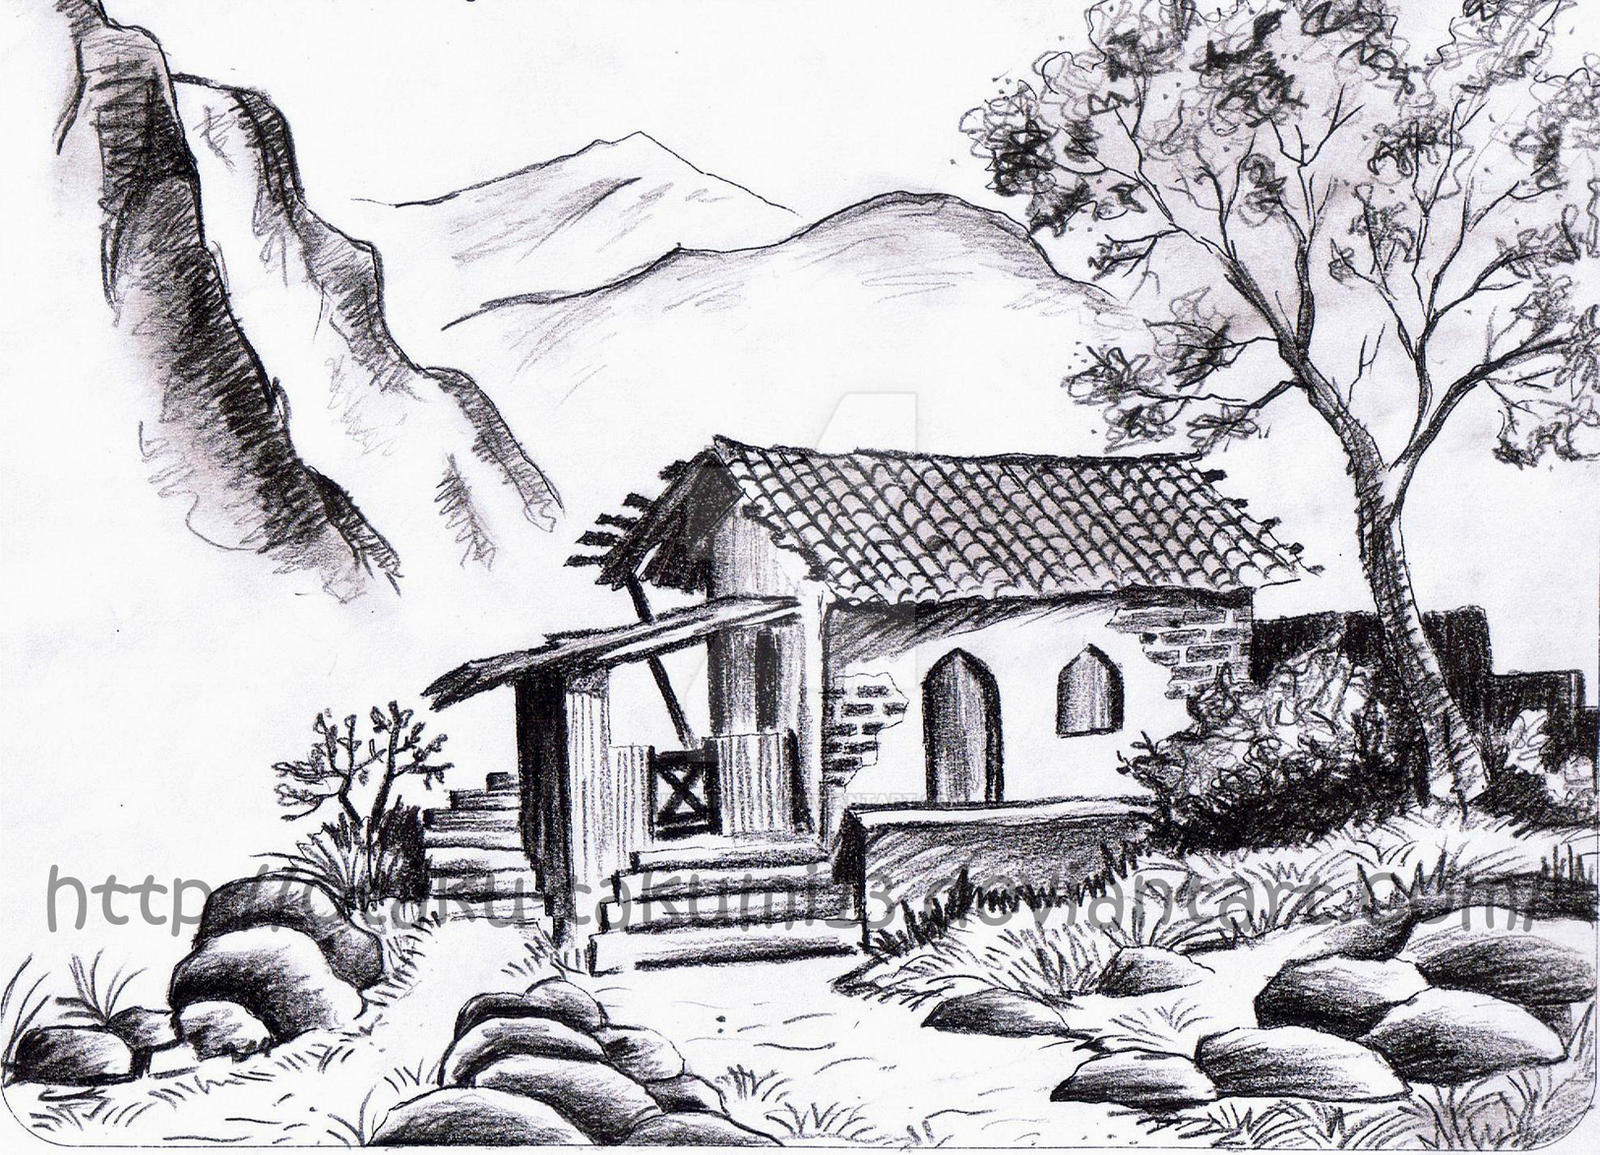 First landscape drawing by Jibarichan on DeviantArt